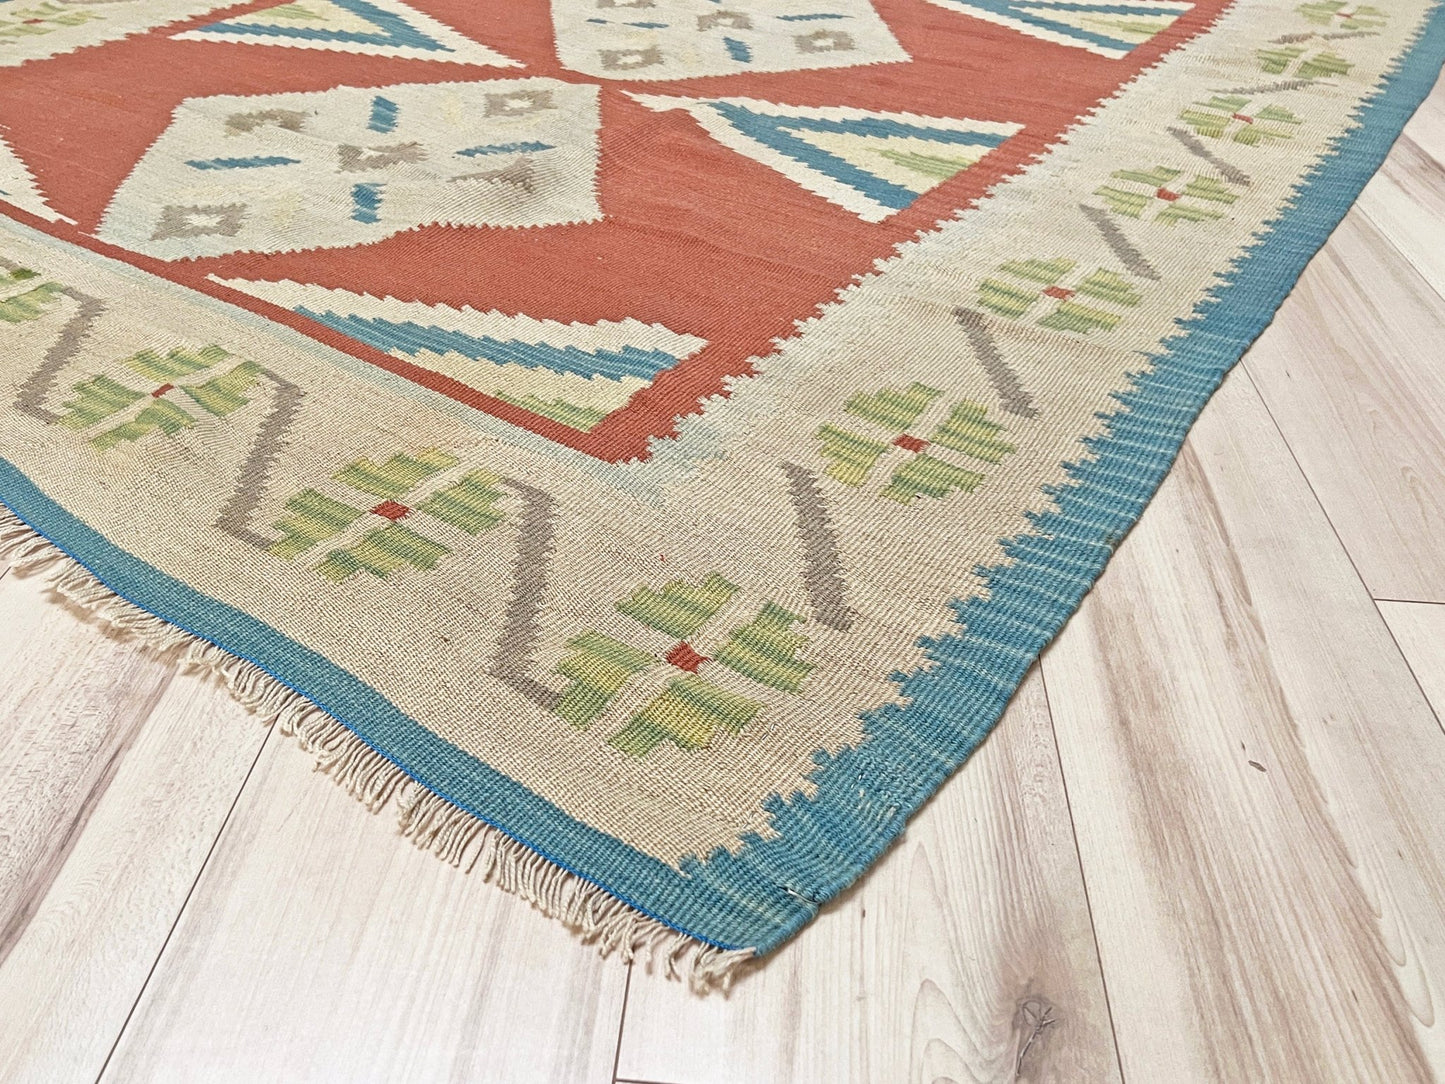 Turkish kilim rug shop san francisco bay area. Flatweave wool handmade rug for living room bedroom nursery kitchen dining. Buy turkish kilim online free shipping